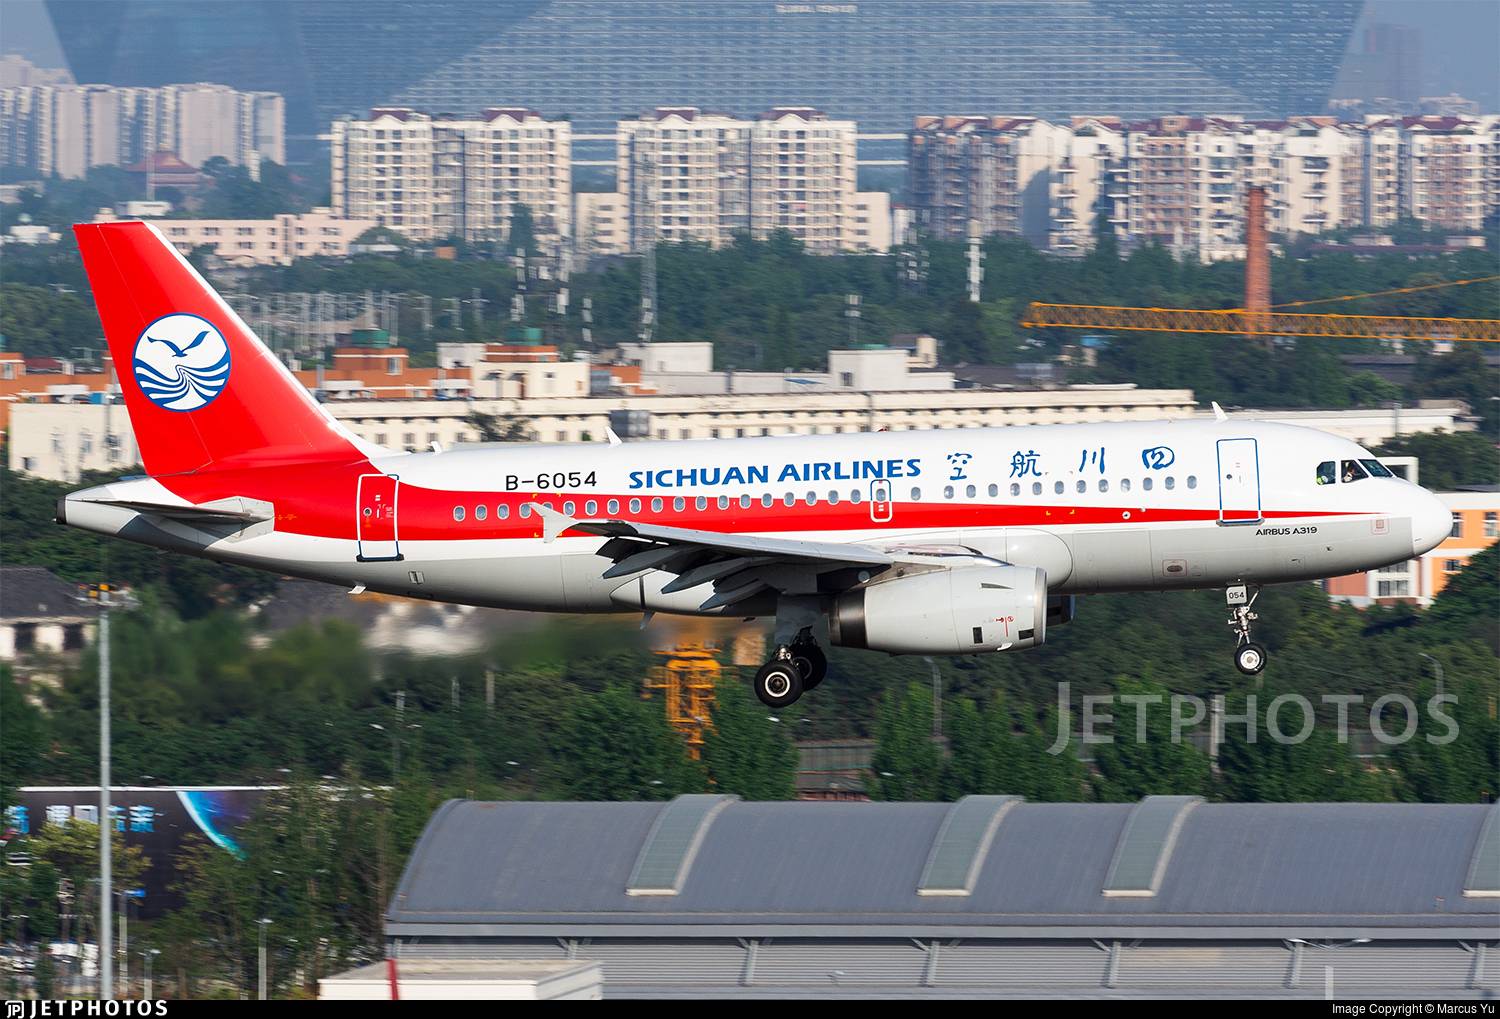 Главная авиакомпания тайваня china airlines